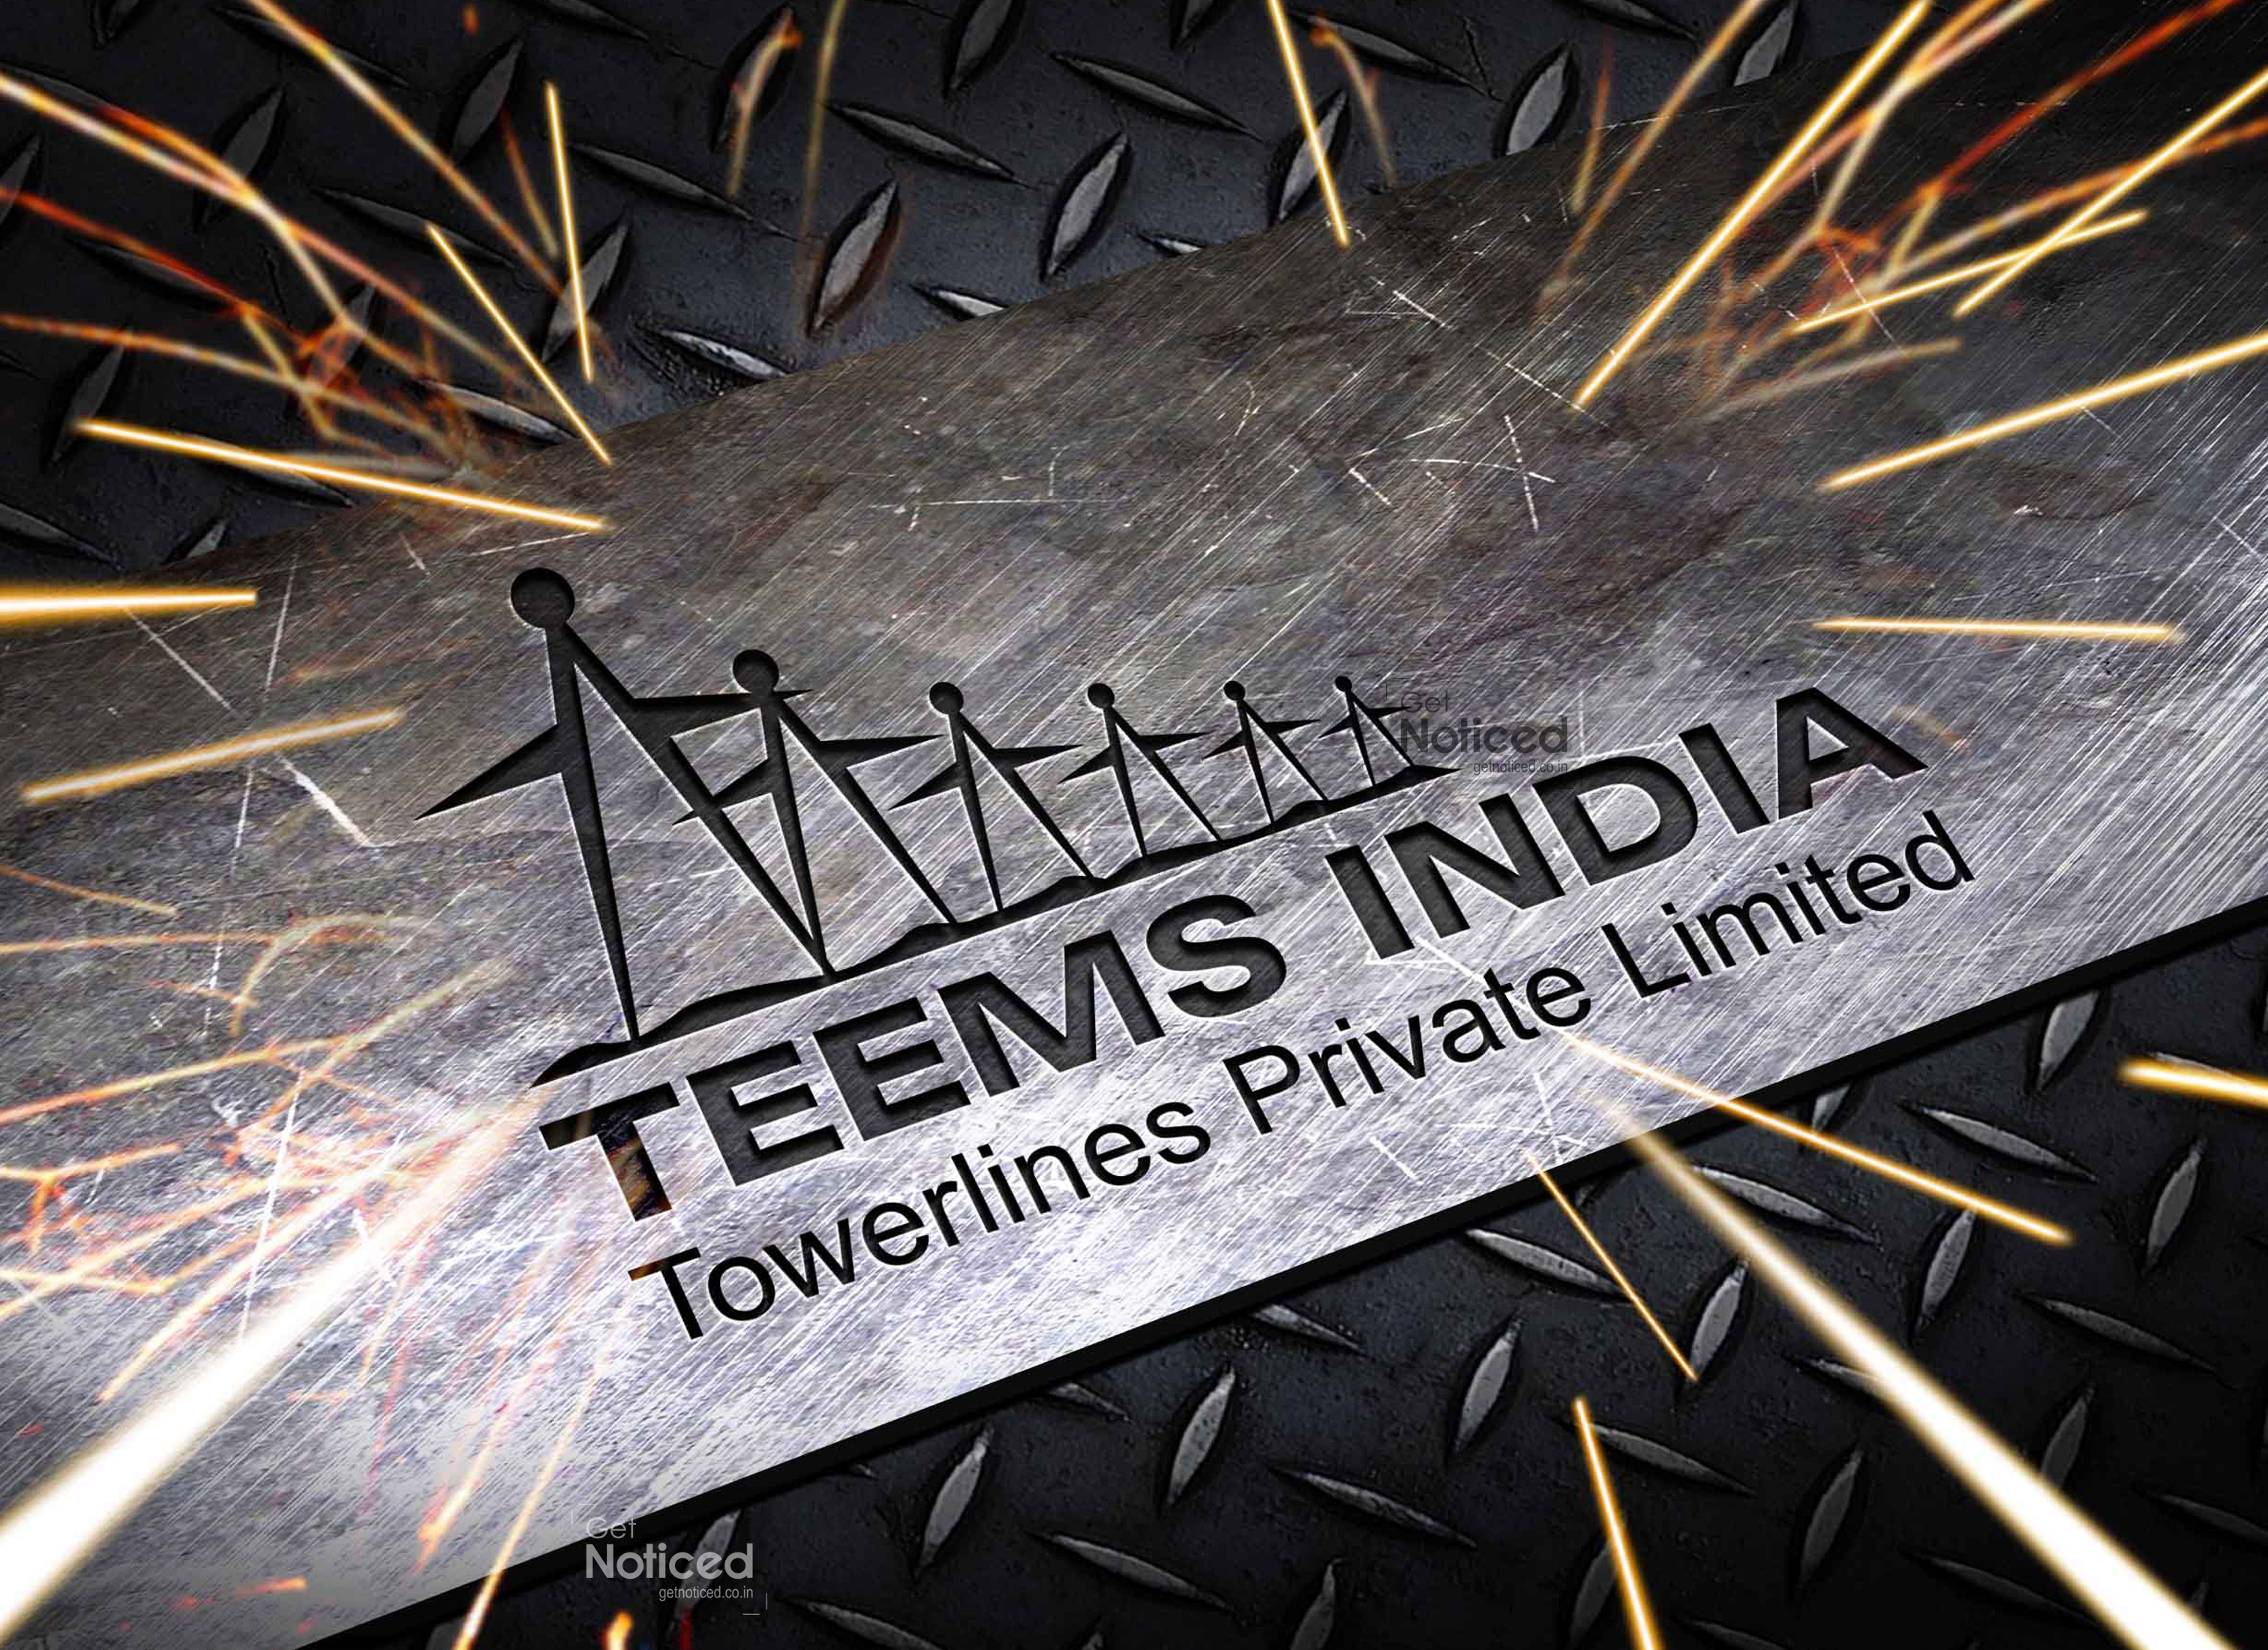 Teems India Logo Design